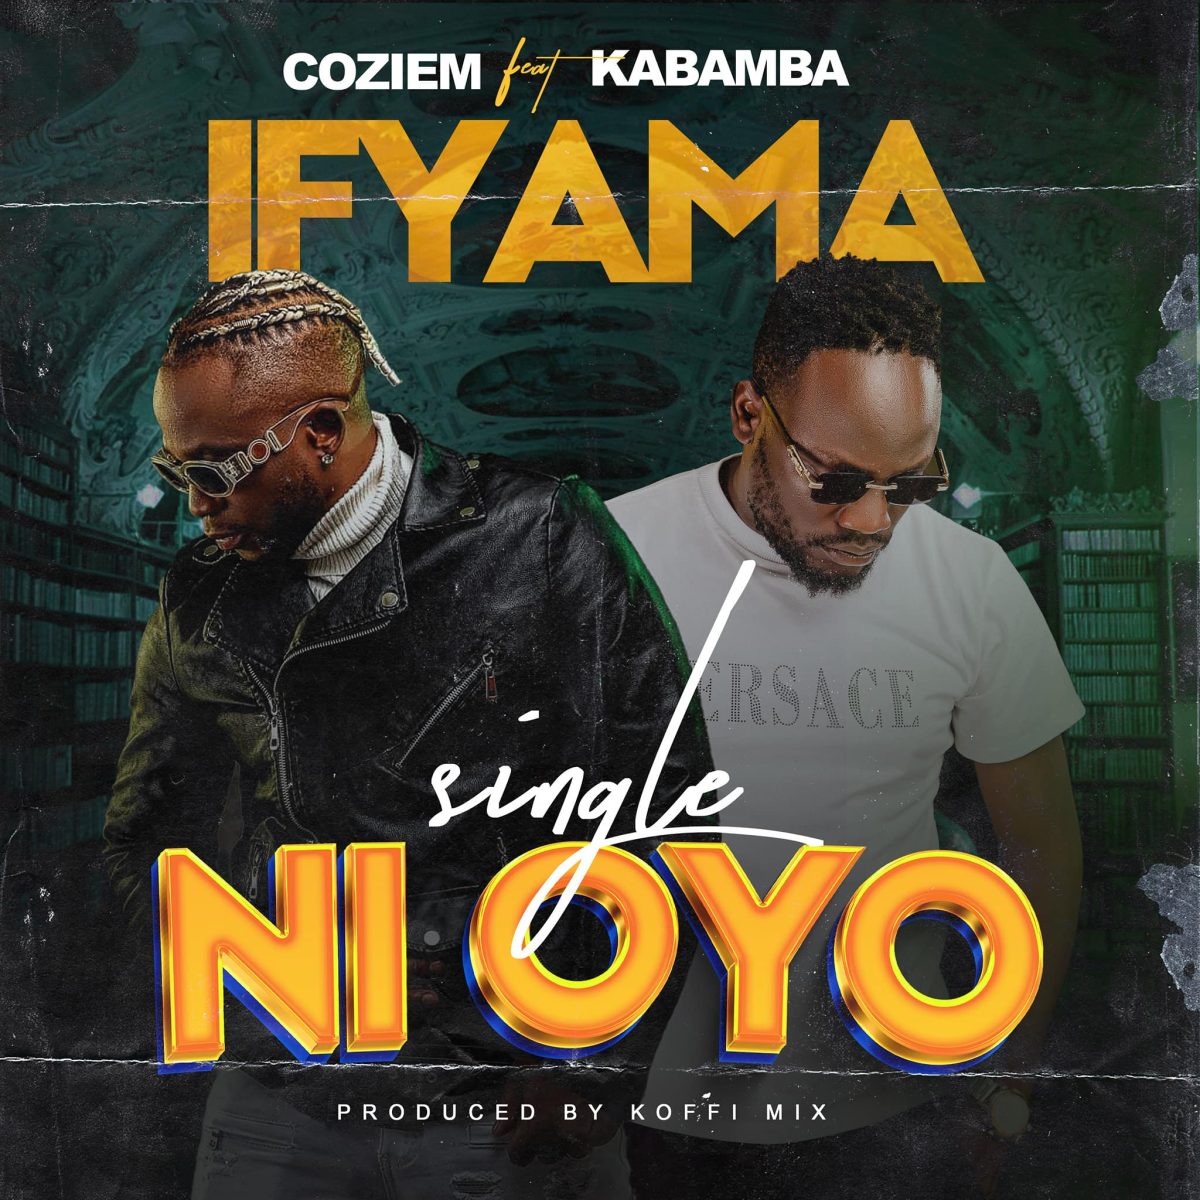 Coziem ft. Kabamba - Ifyama Single Ni Oyo